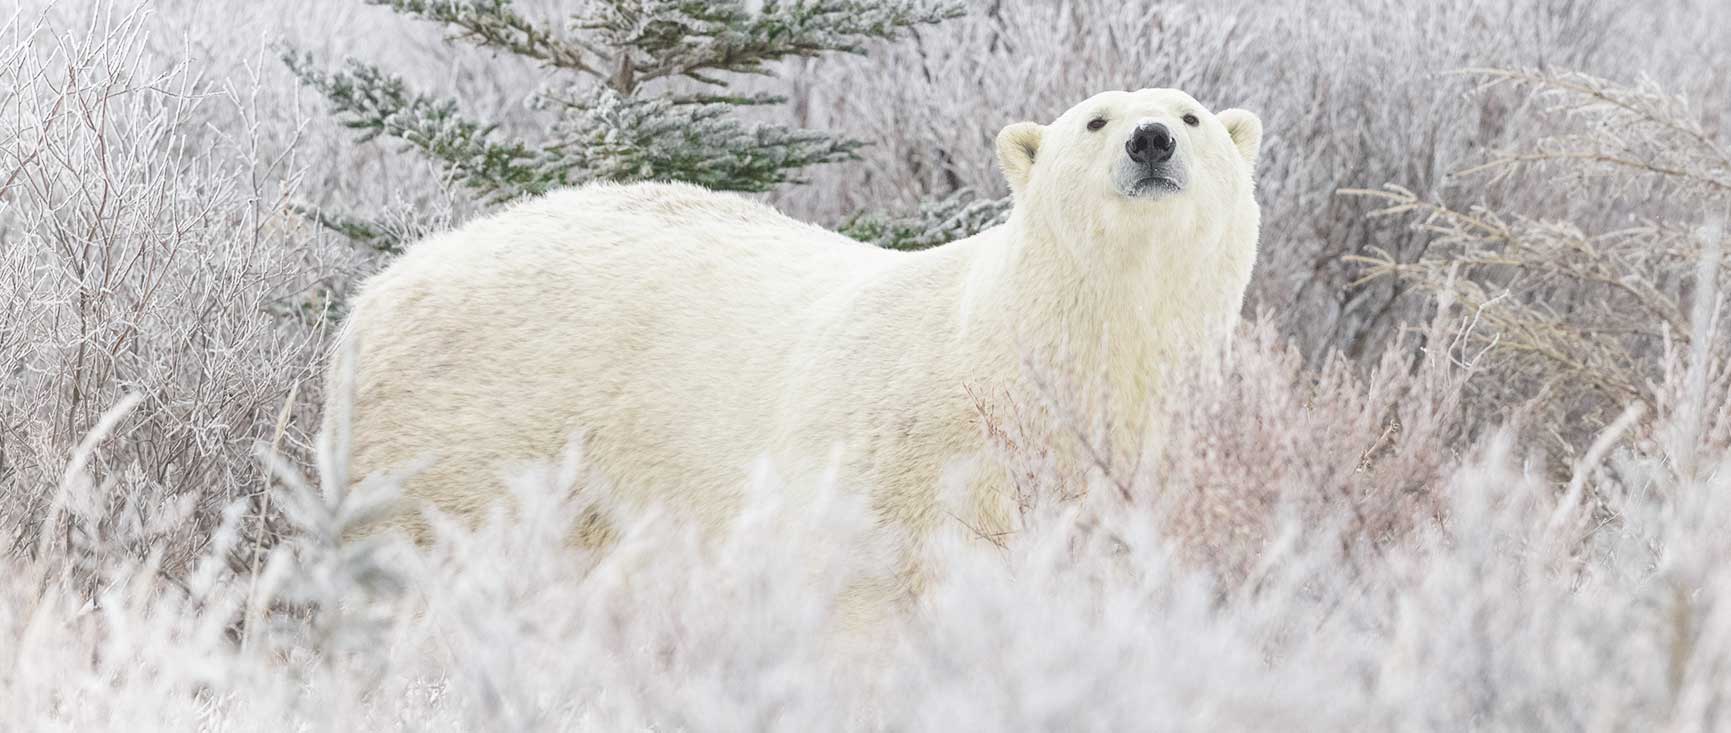 Elite Photographers Lead Late Fall Safaris for Polar Bears and Wolves